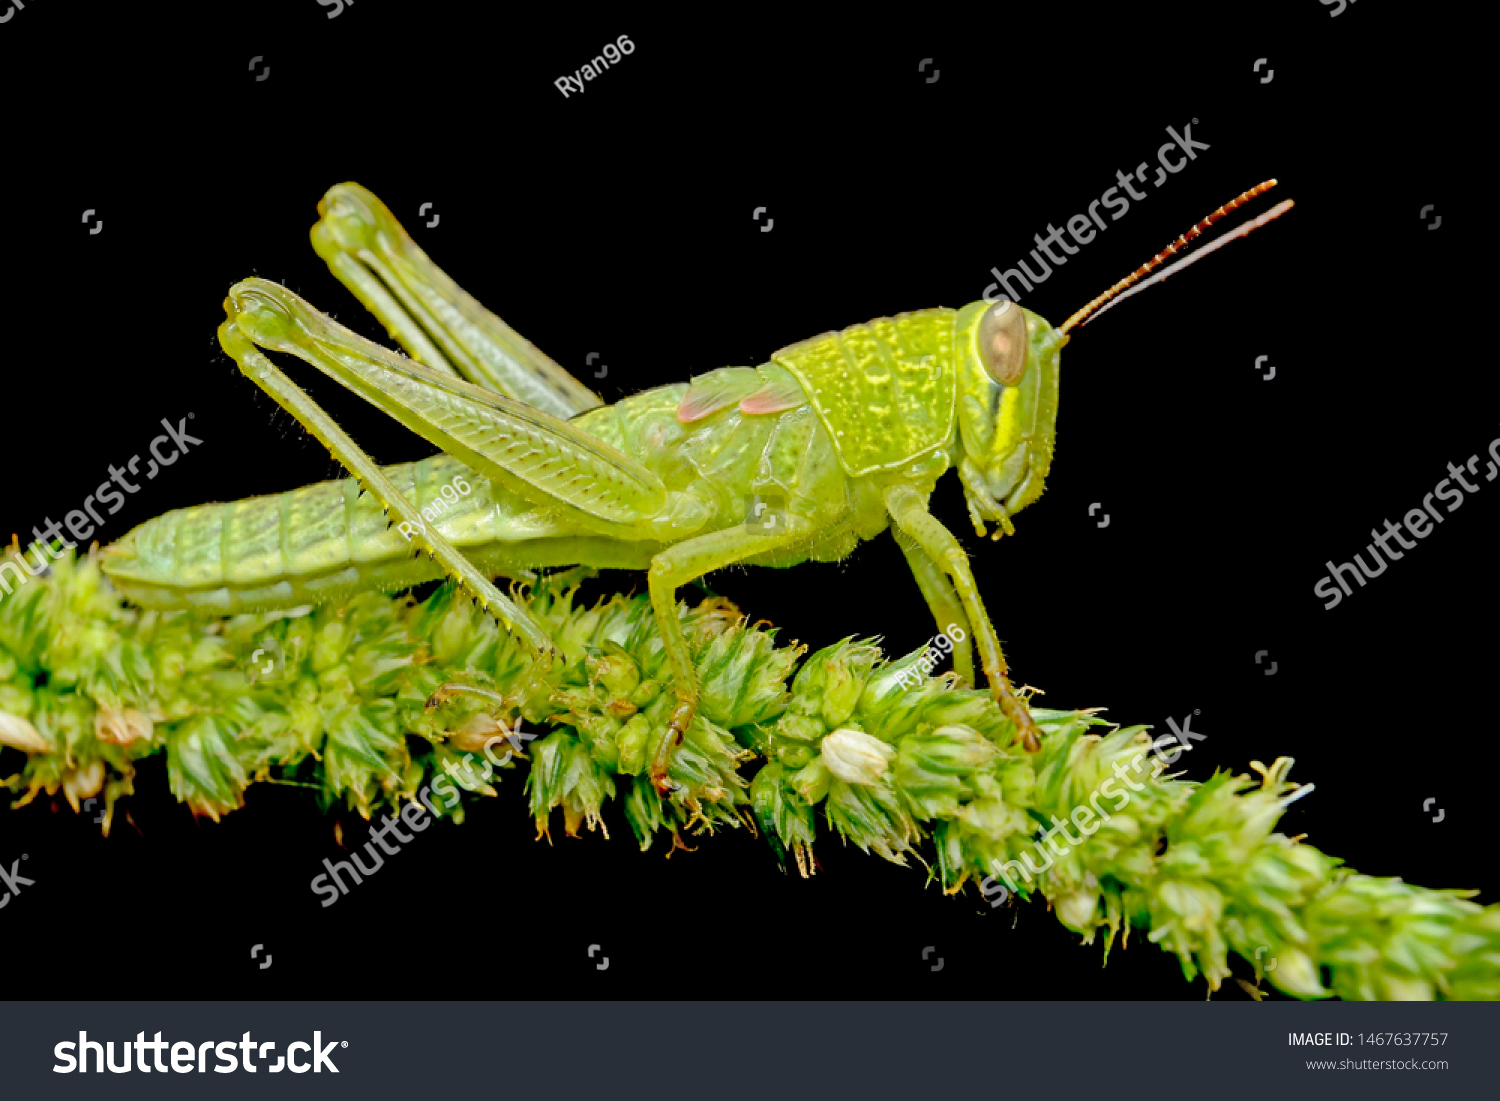 grasshoper insect , take with nikon d3100 kitt lens + macro lens , internal flash + DIY diffuser #1467637757